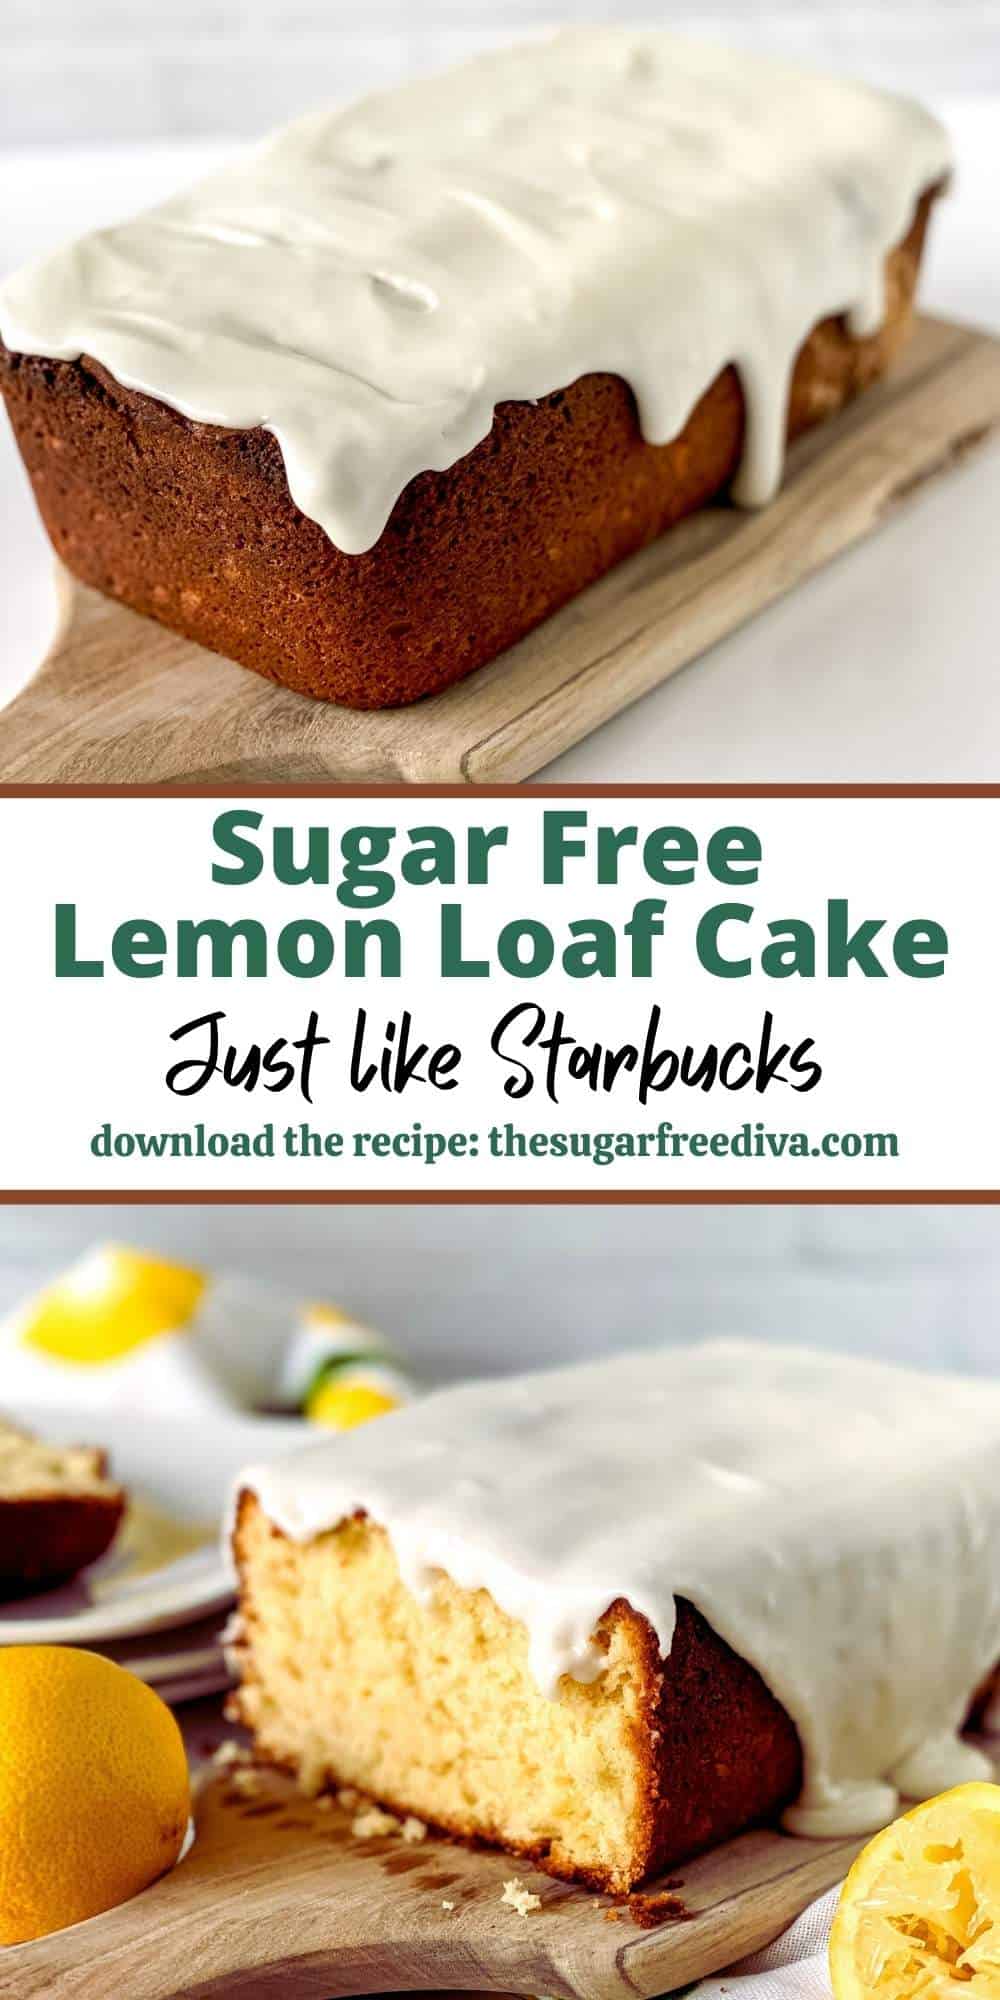 Sugar Free Copycat Lemon Loaf